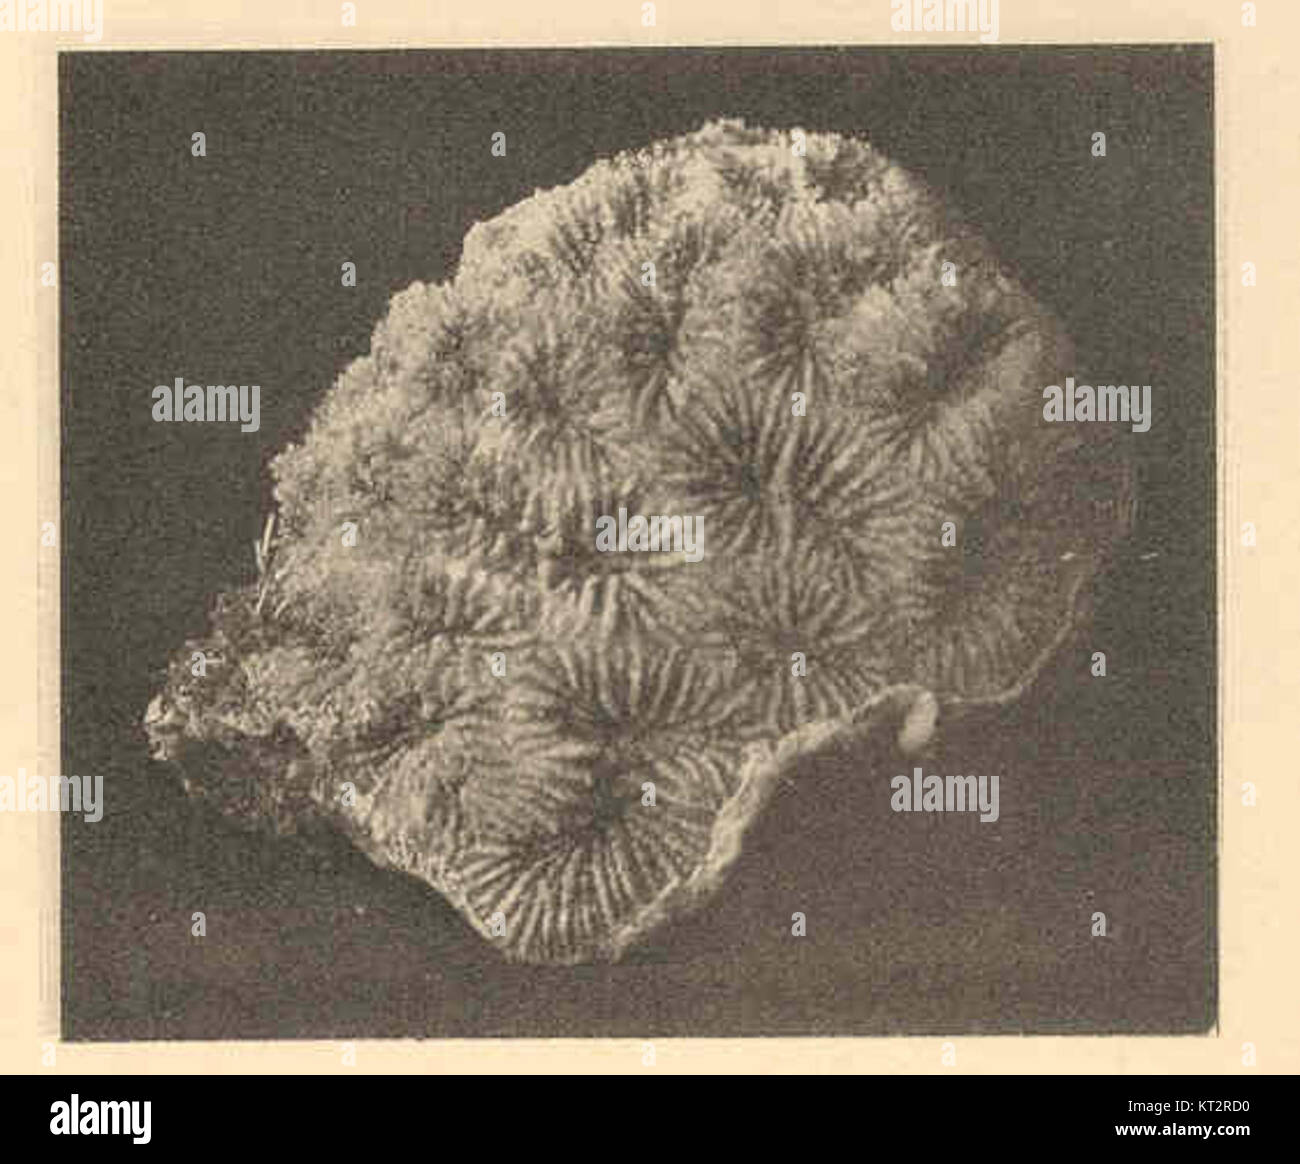 38200 Favia fragum (Esper) View of a corallum from side Stock Photo